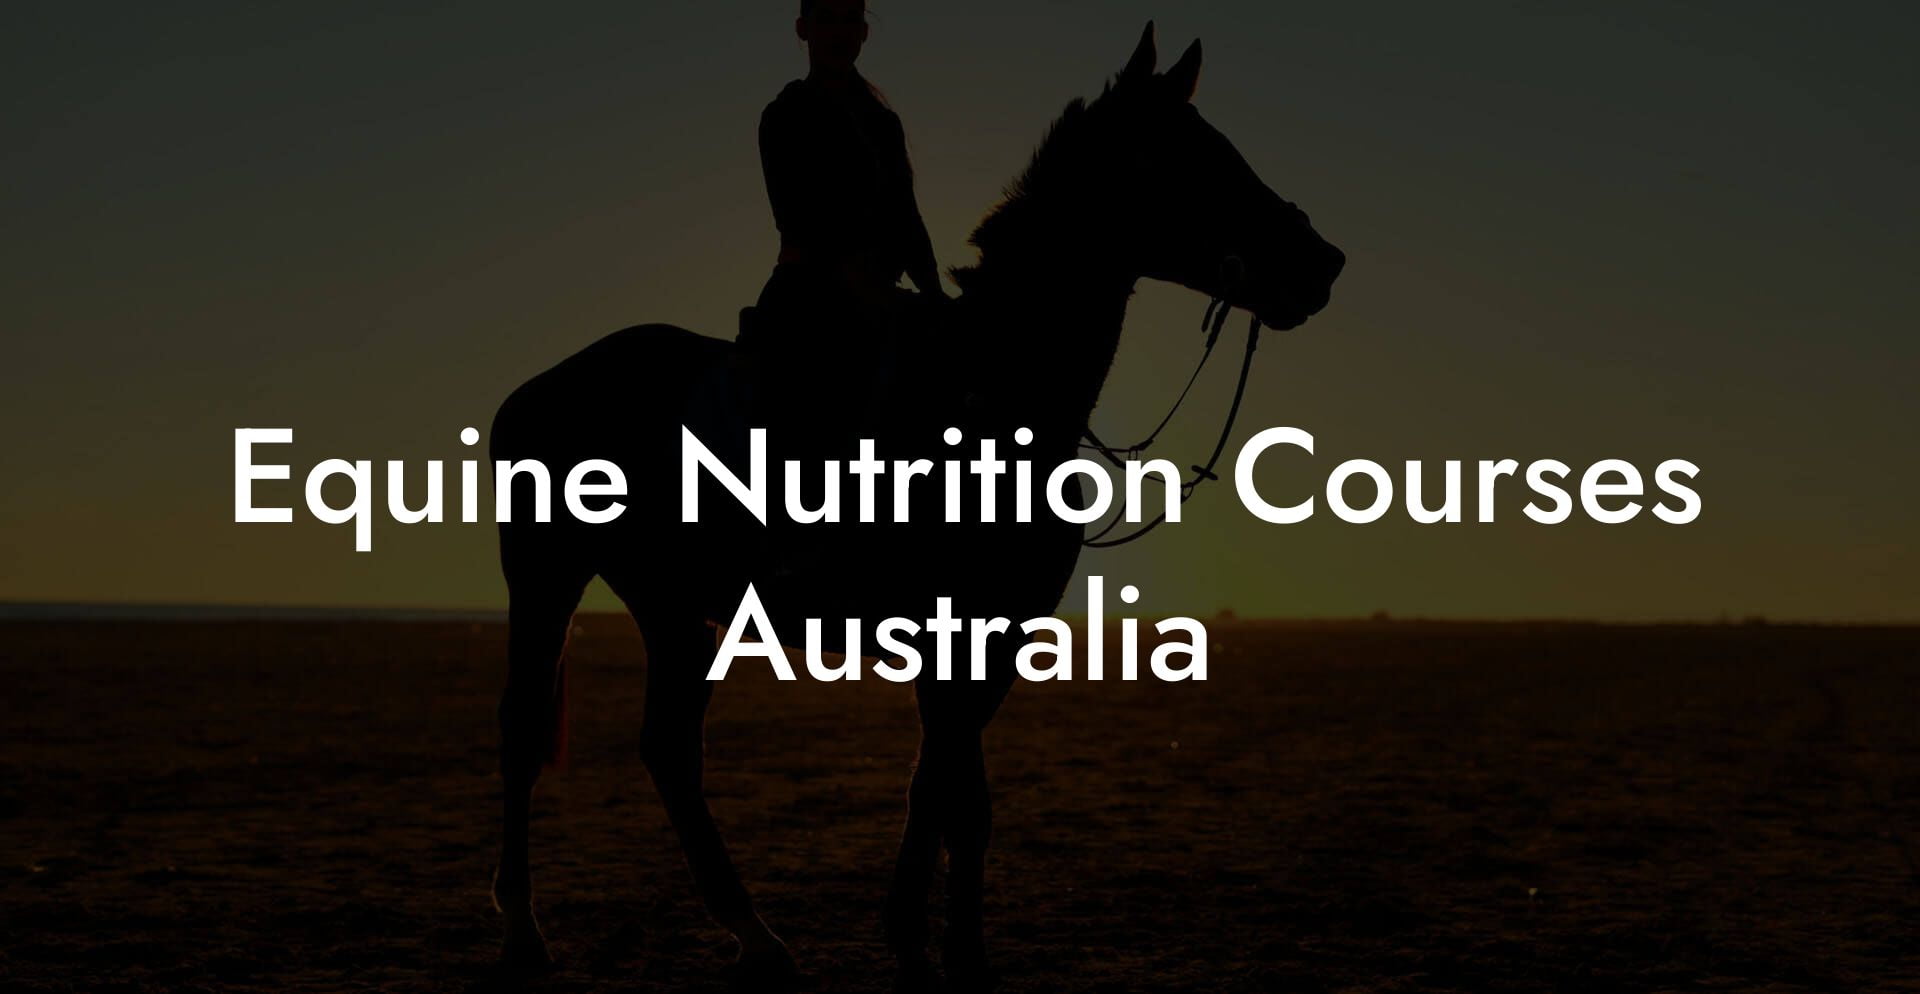 Equine Nutrition Courses Australia